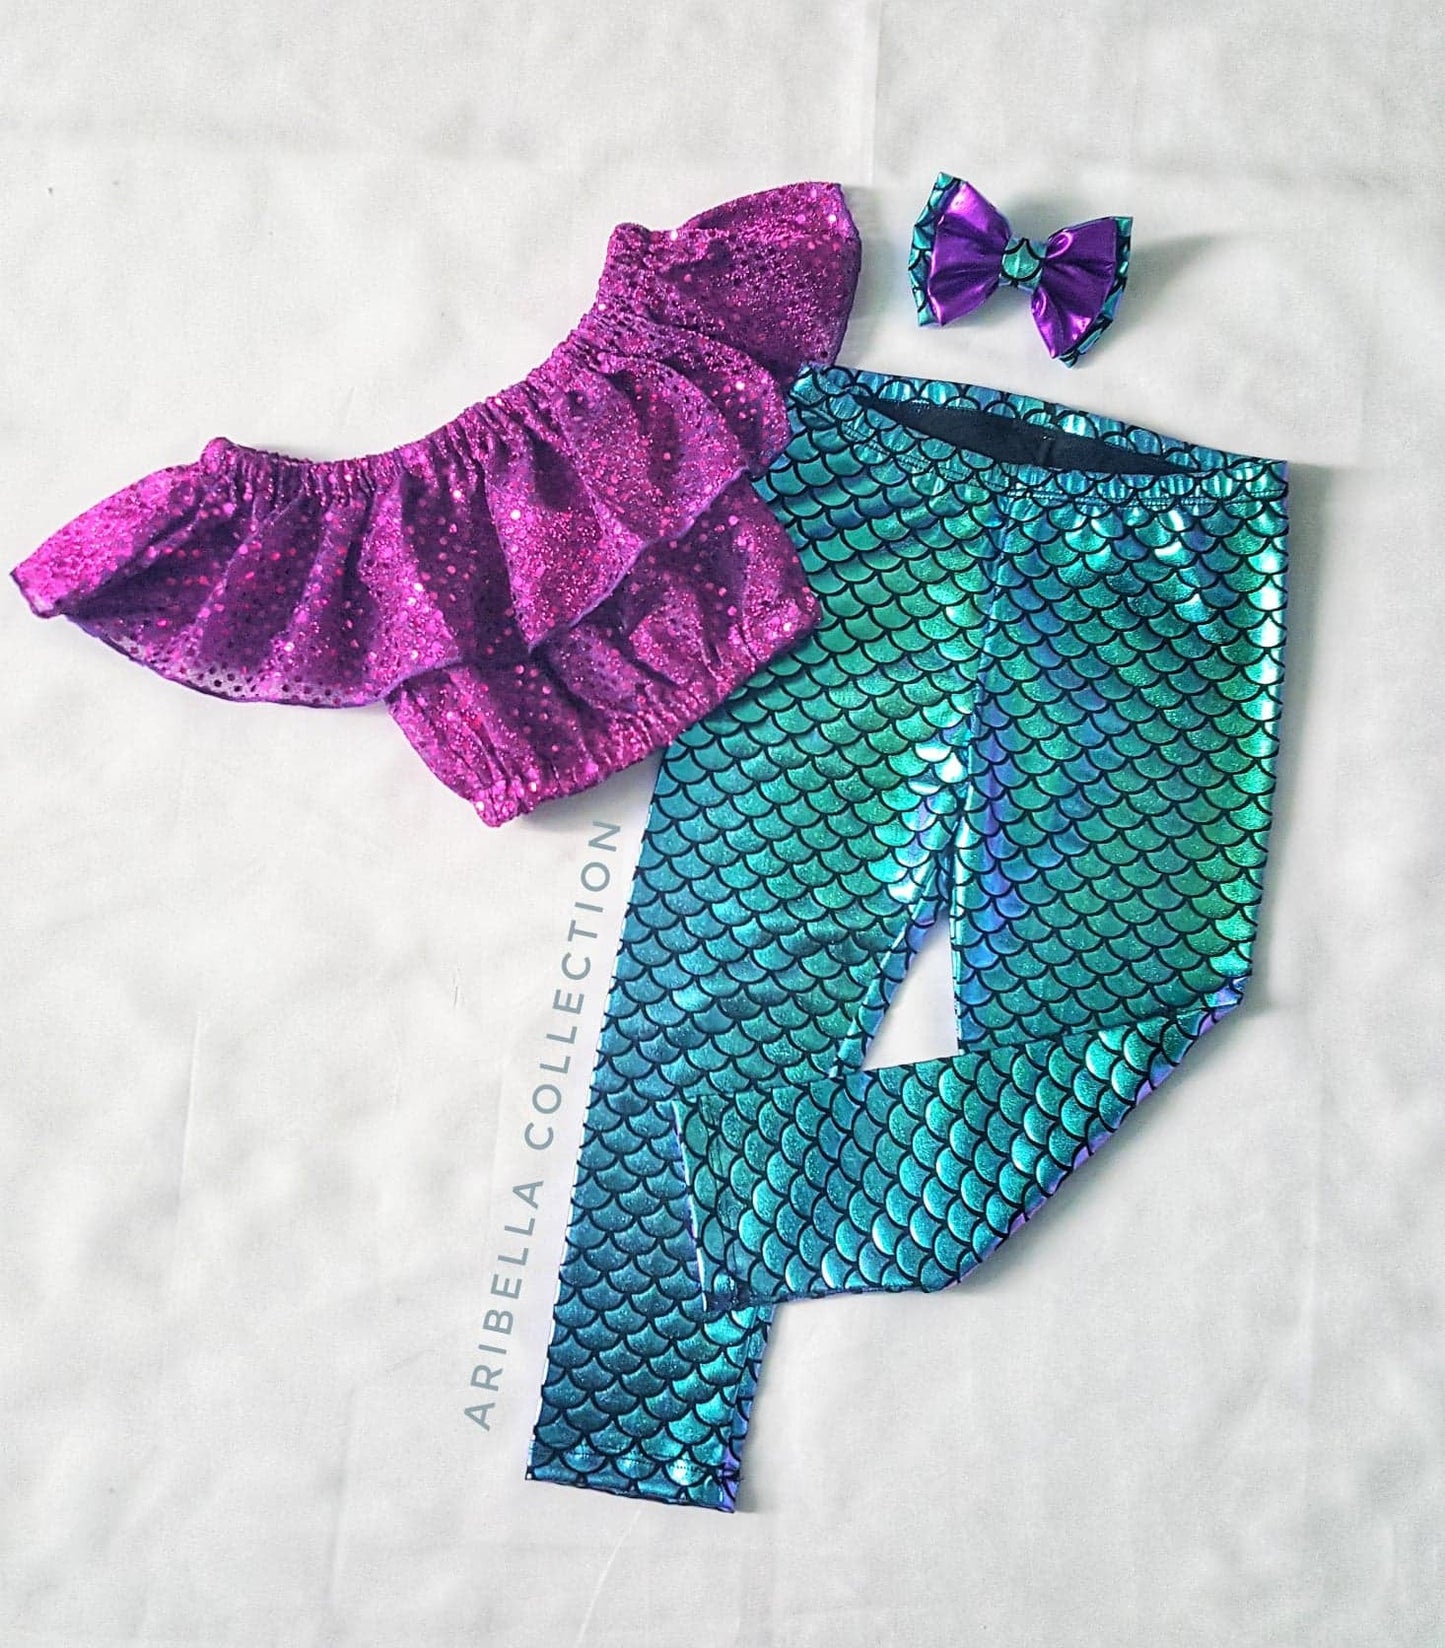 Mermaid Outfit Set - Confetti Dot Top, Leggings, & Hair Clip Bow - Aribella Collection, Inc.